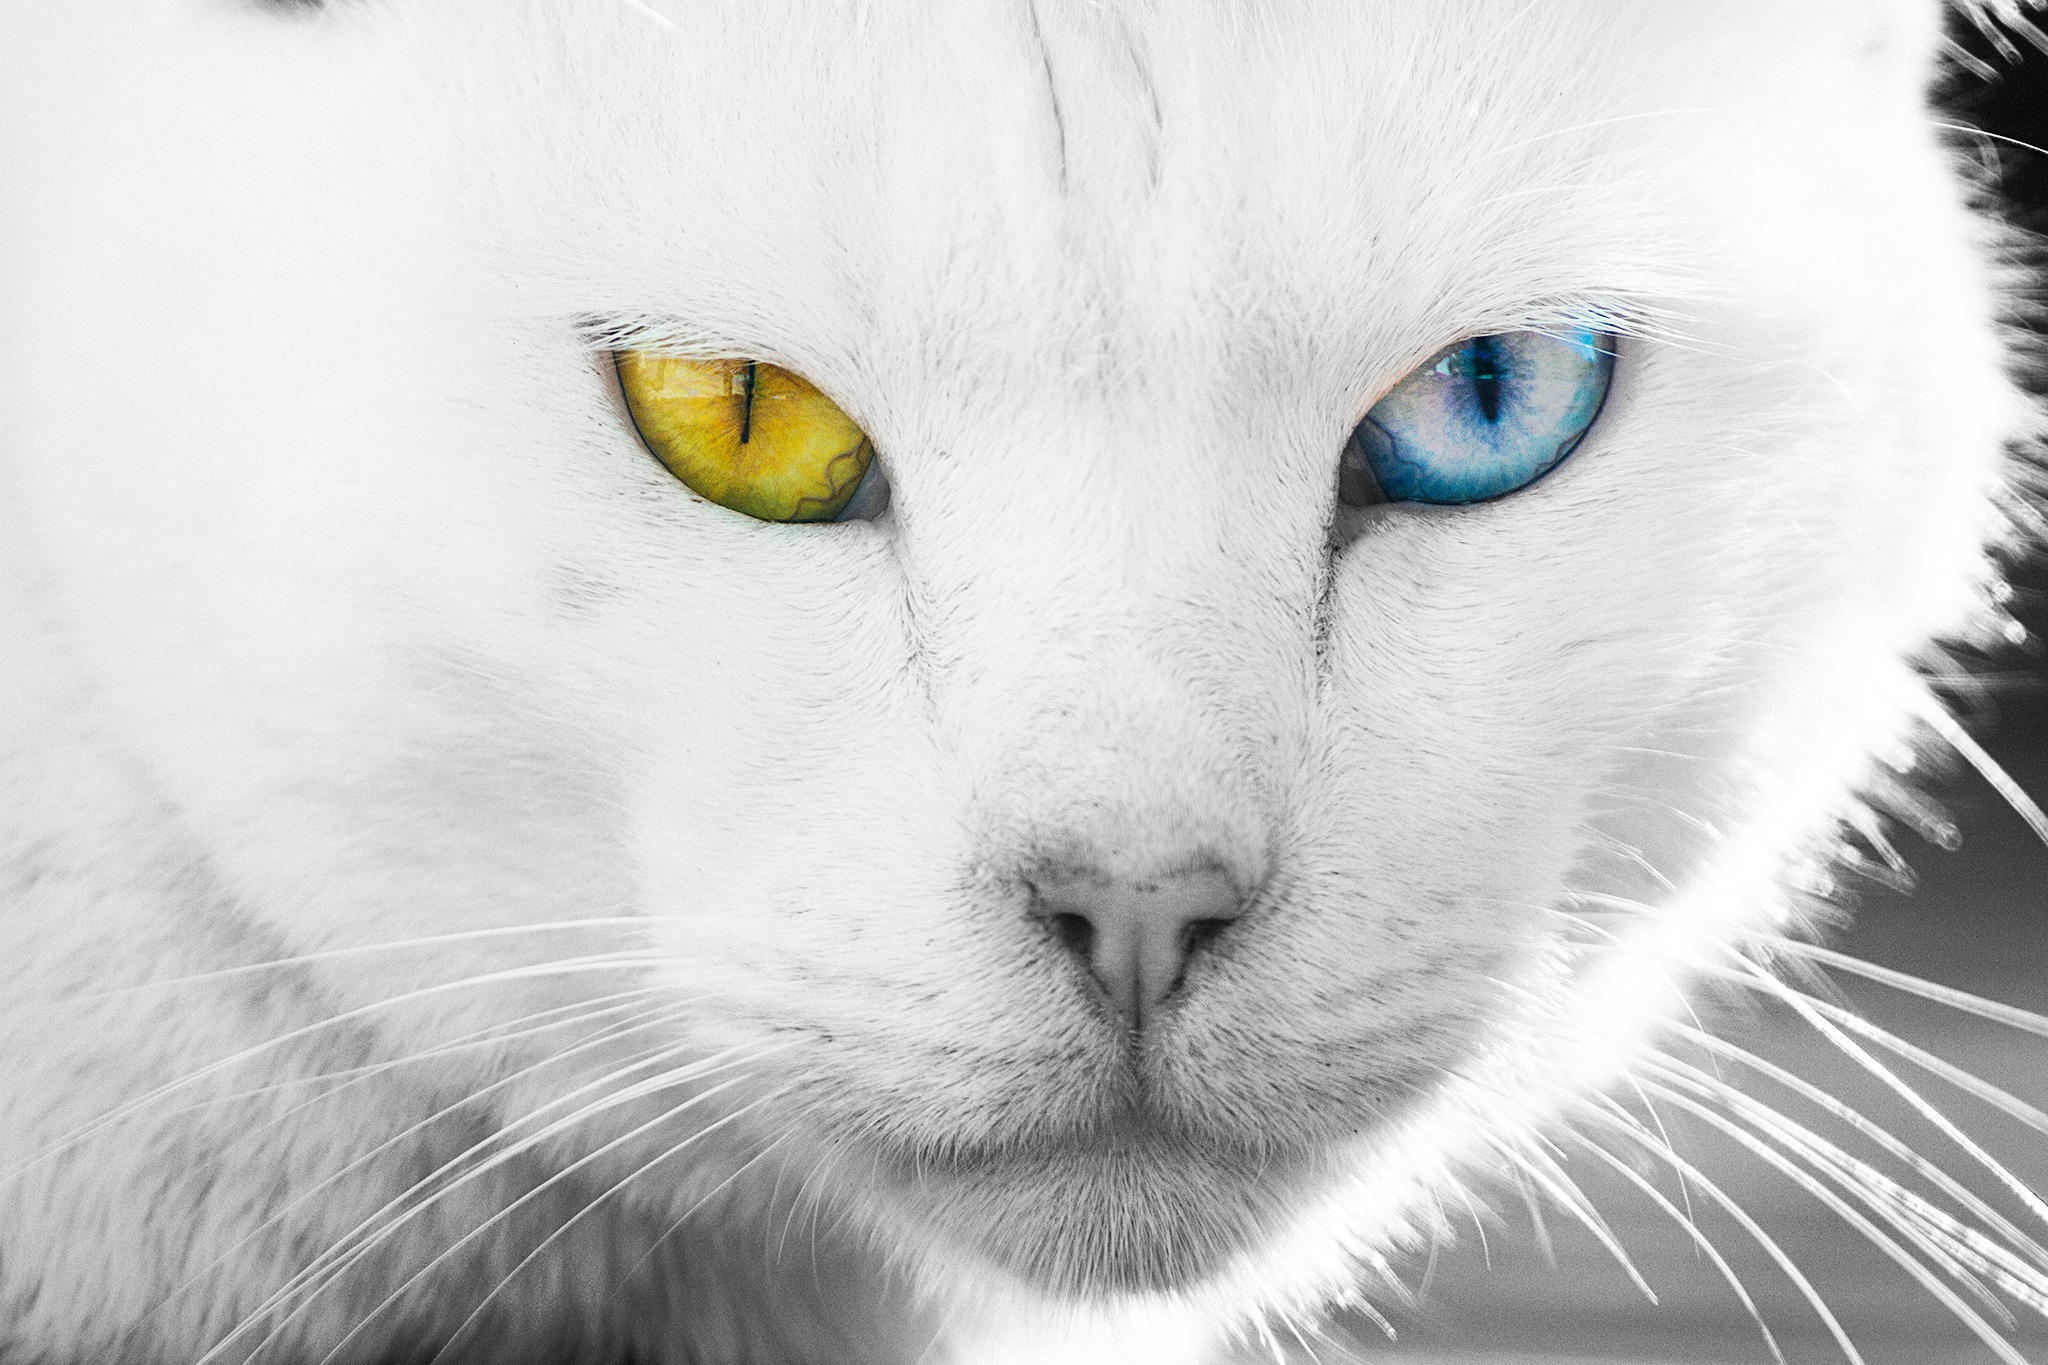 General 2048x1365 cats animals heterochromia closeup mammals animal eyes